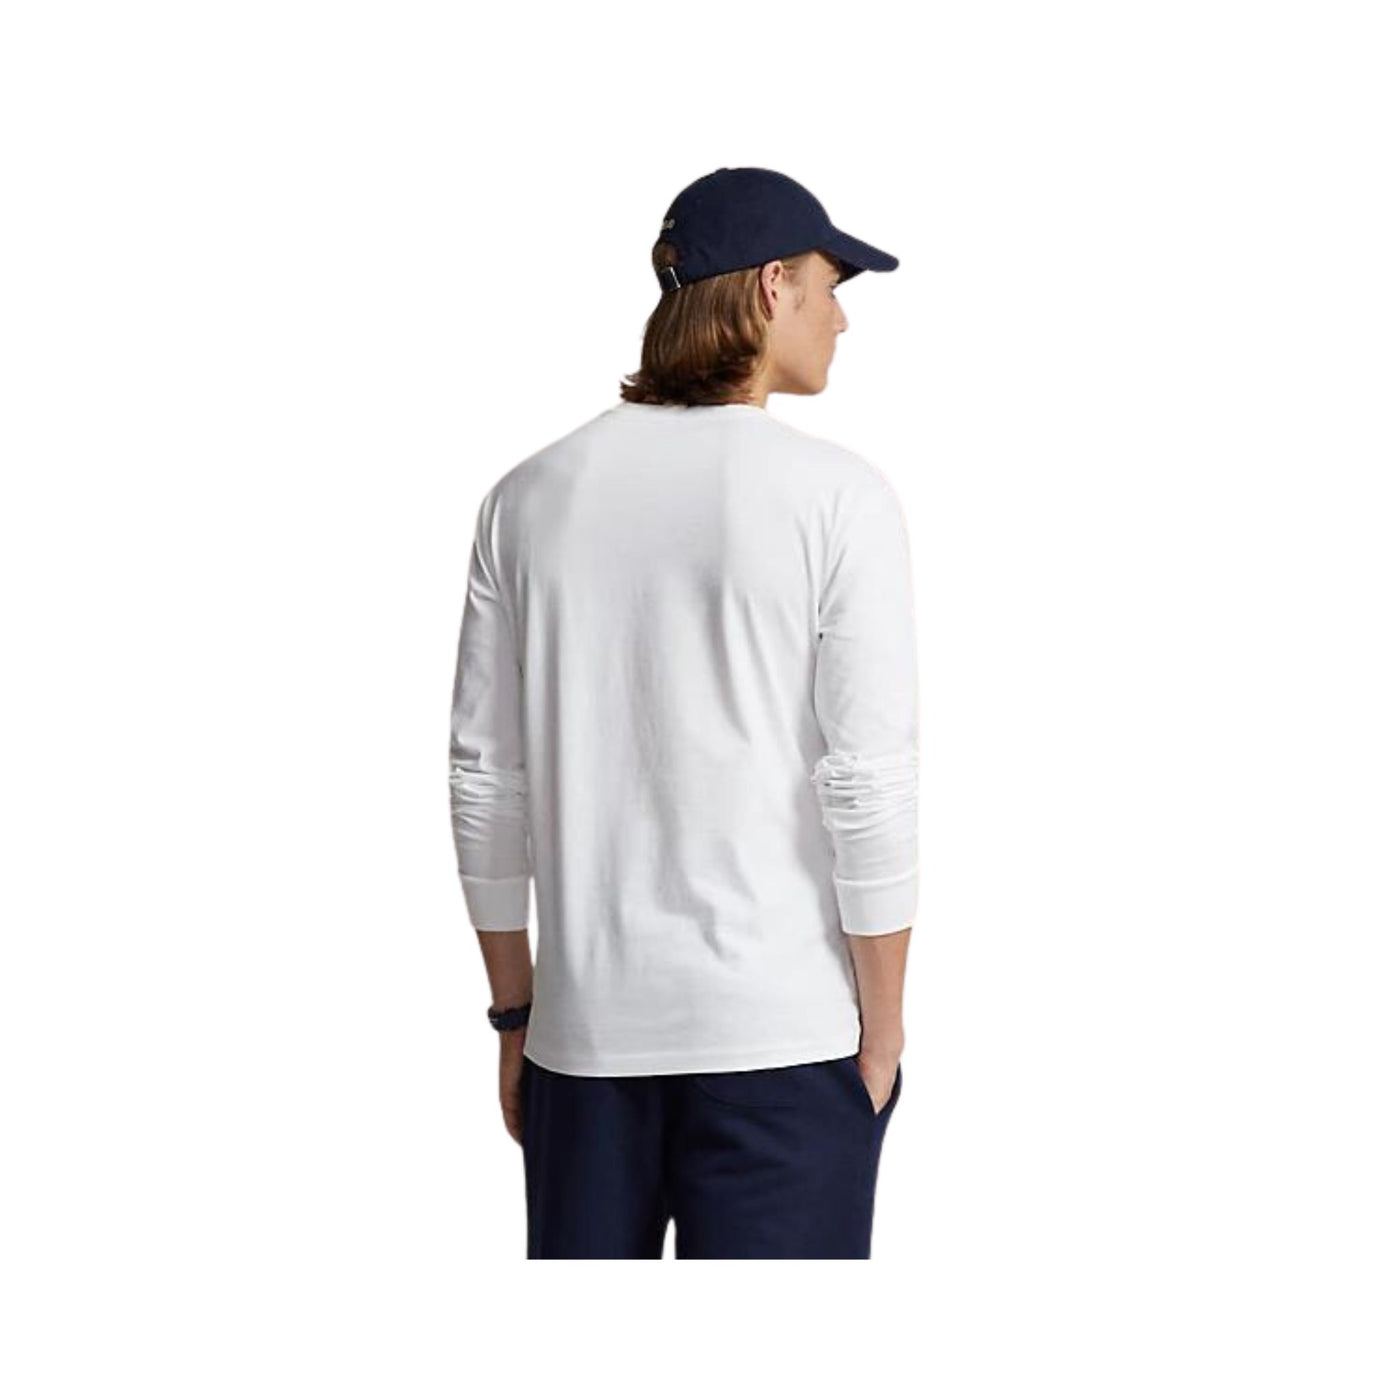 T-shirt da uomo bianca vista retro su modello